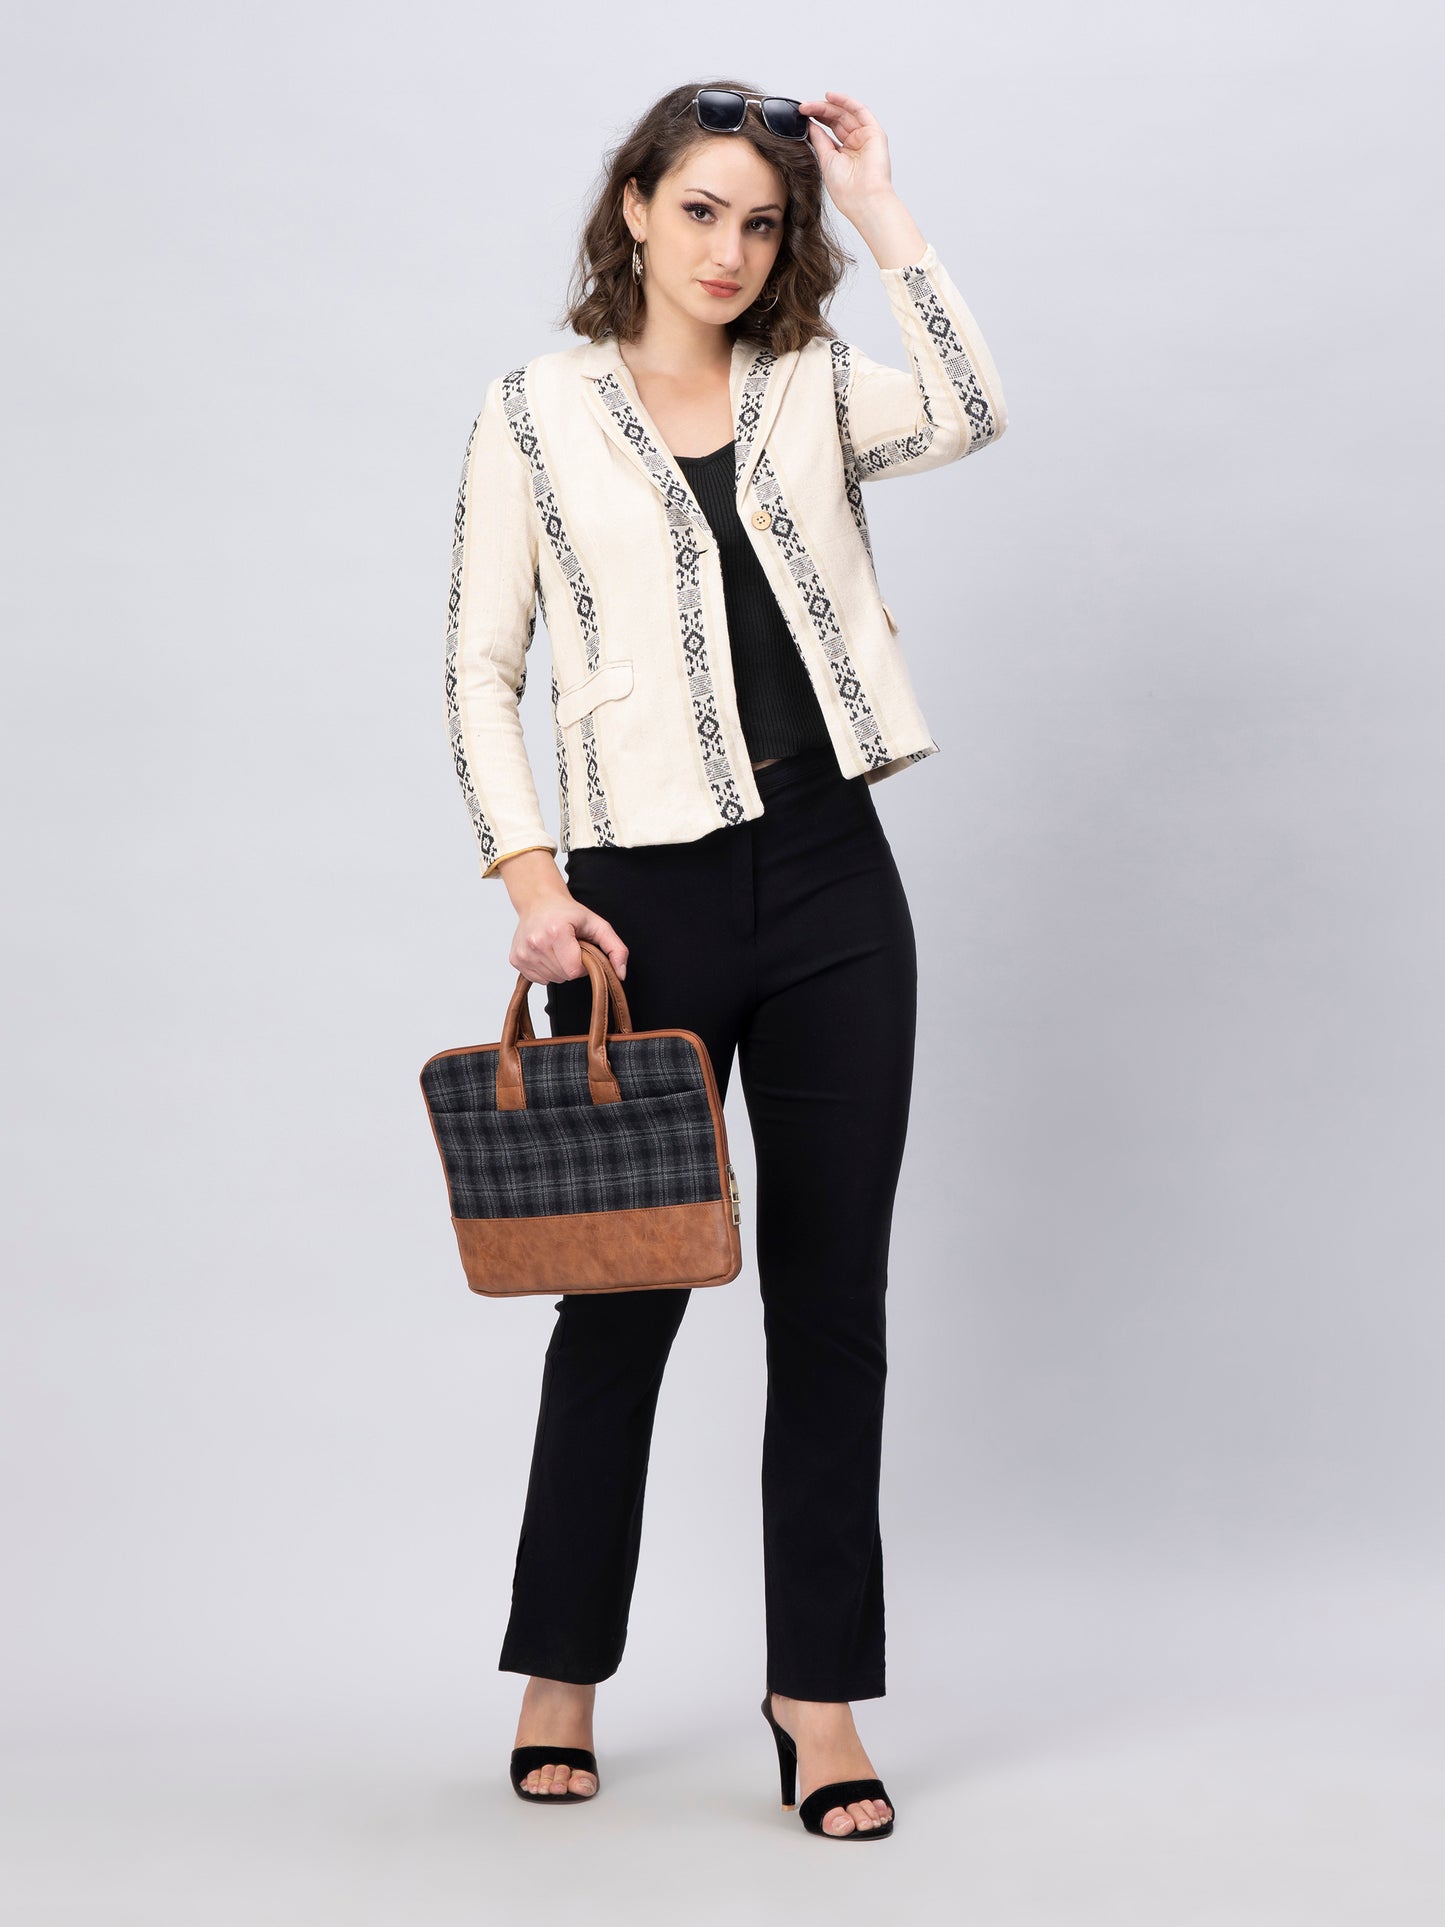 A lady in Elegant Black And White Blazer In Jute Cotton, a office wear for women wearing a handbag